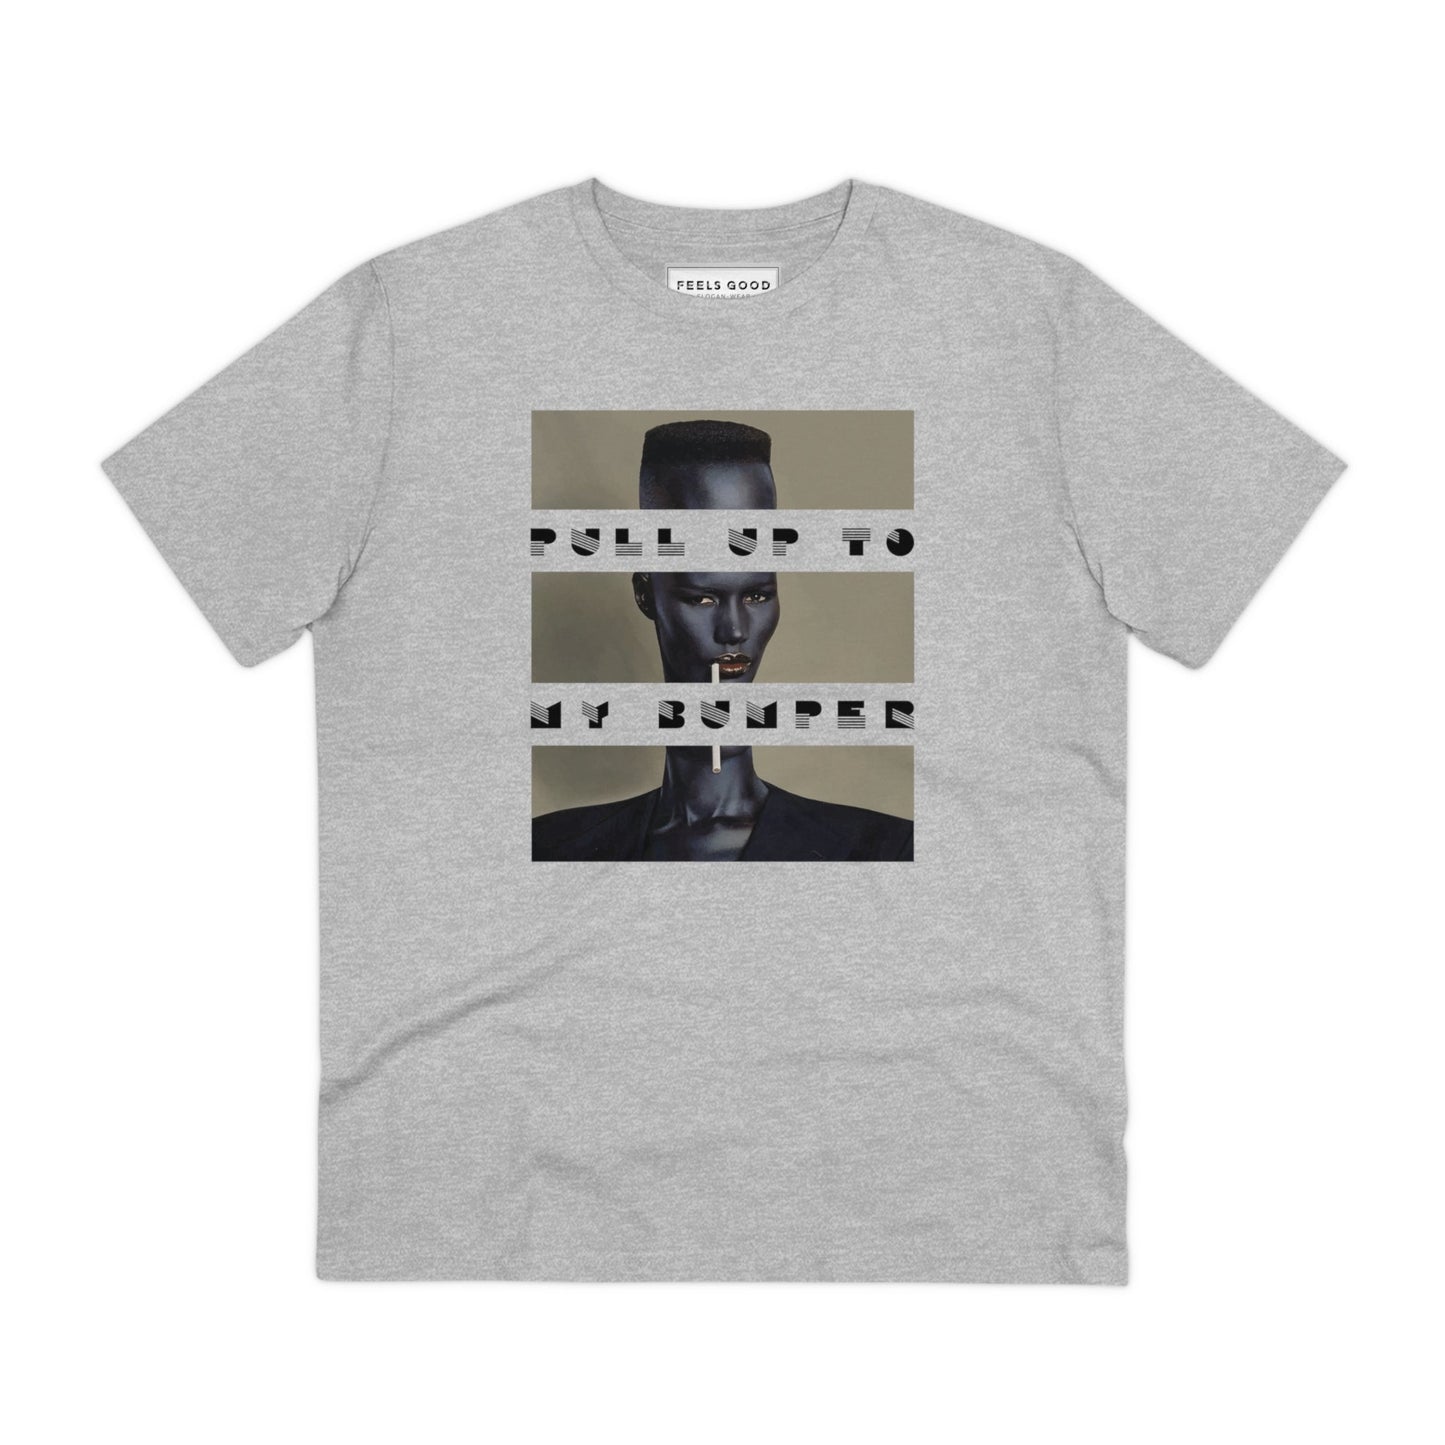 Urban 'Pull Up To My Bumper' Grace Organic Cotton T-shirt - Grace Jones Tshirt